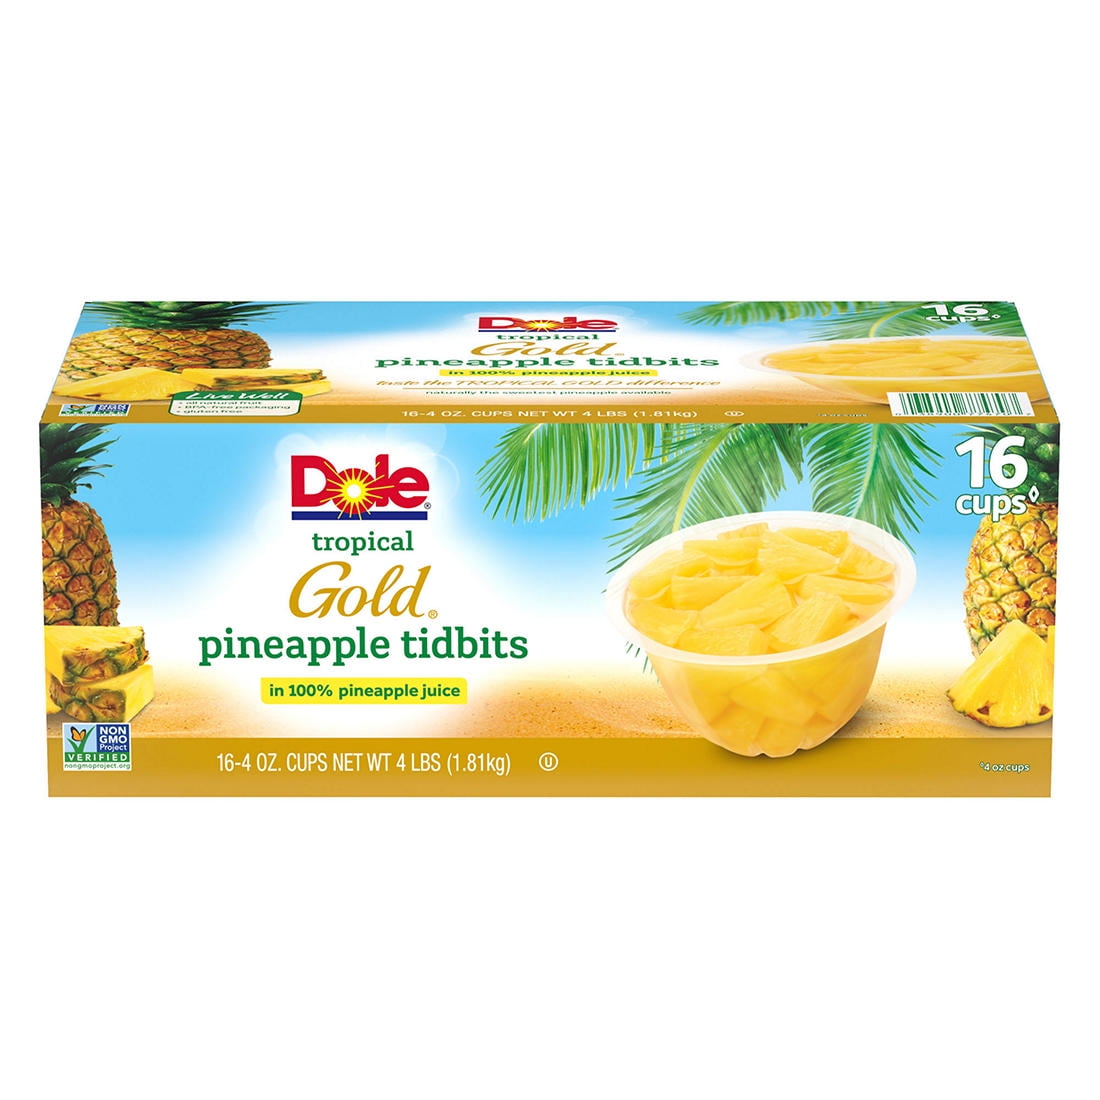 Product of Dole Tropical Gold Premium Pineapple Tidbits 16 Pk. 4 oz